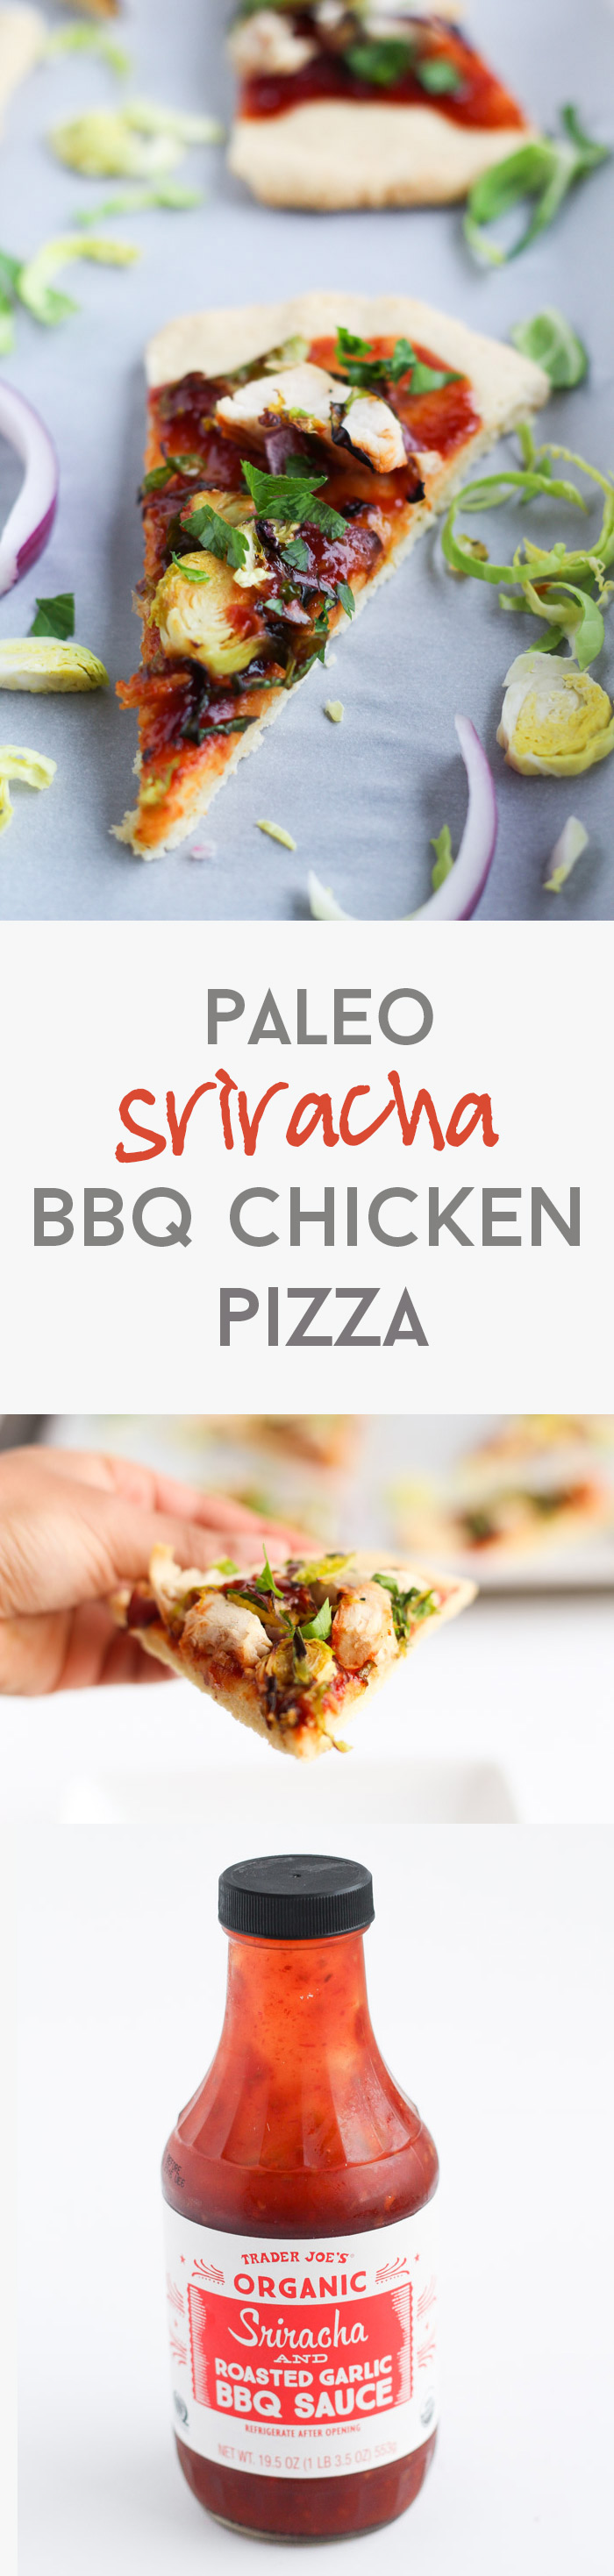 Paleo Sriracha BBQ Chicken Pizza. Grain-free, dairy-free and ready in under an hour! #paleo #glutenfree #healthy 